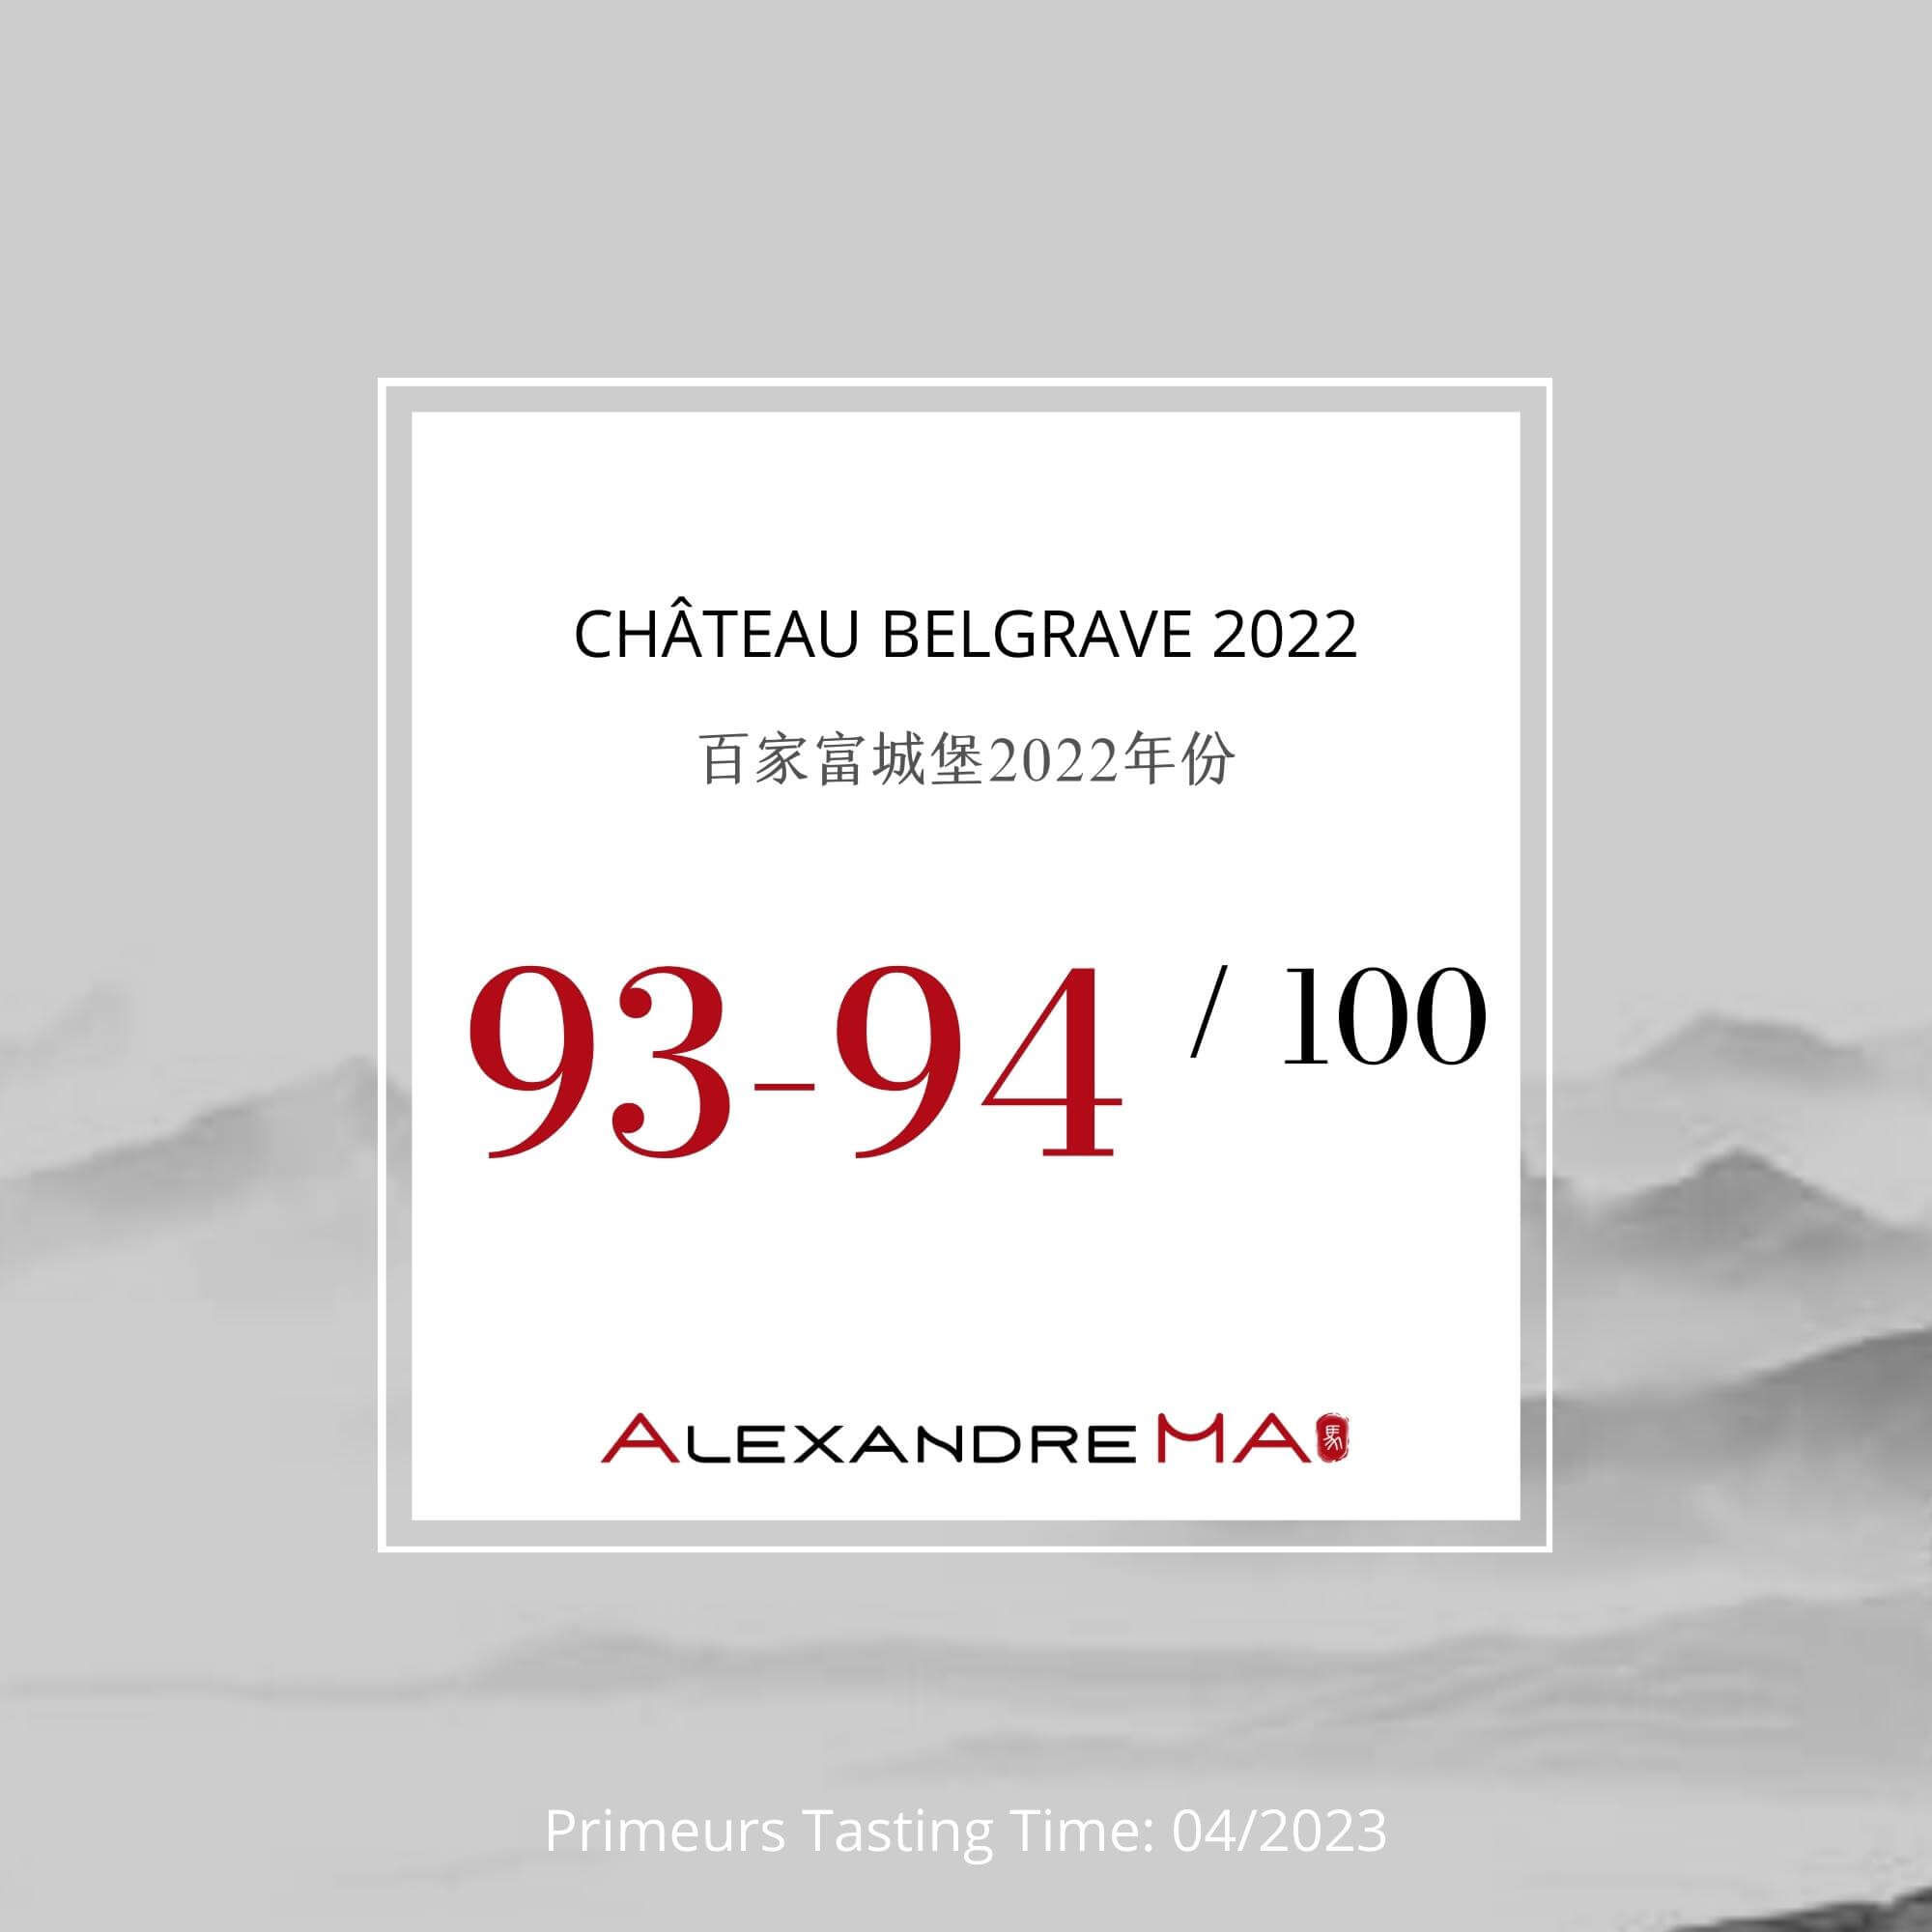 Château Belgrave 2022 Primeurs - Alexandre MA